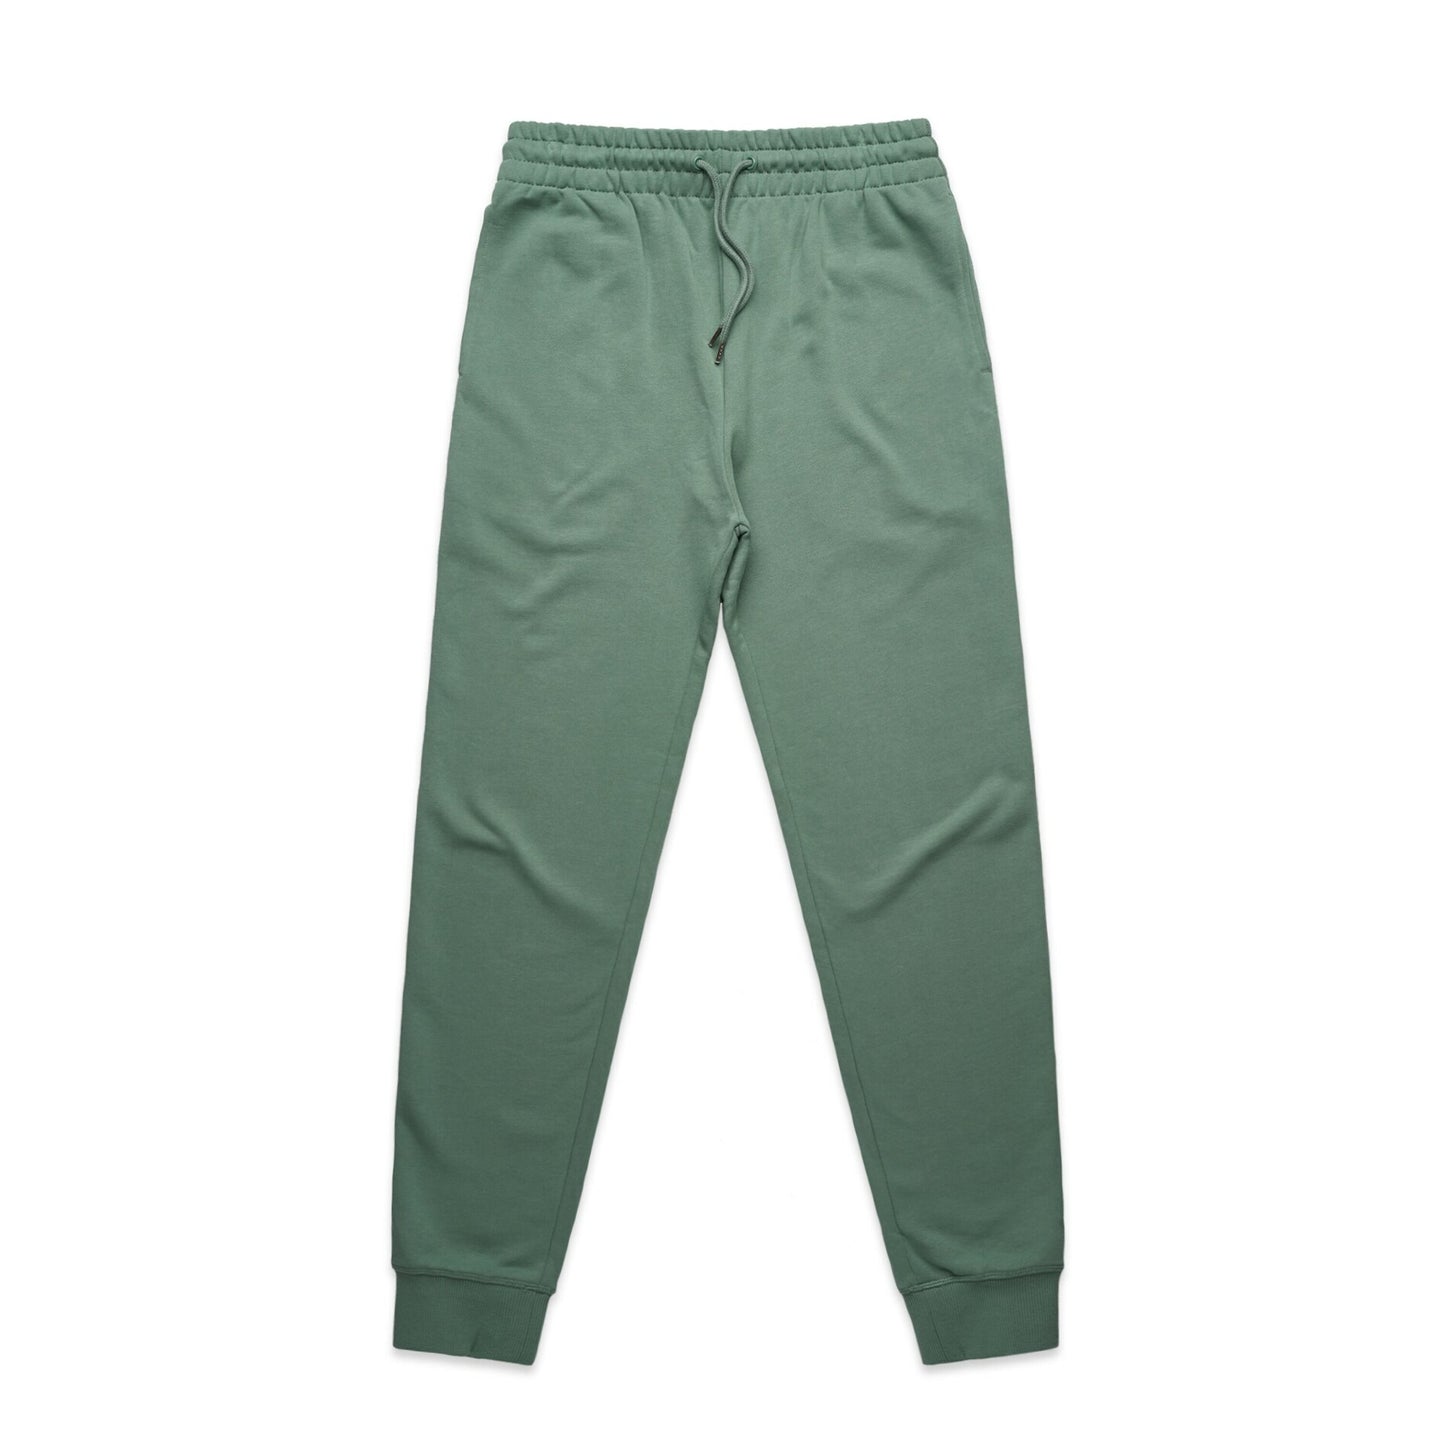 Ascolour Wo's Premium Track Pants (4920)